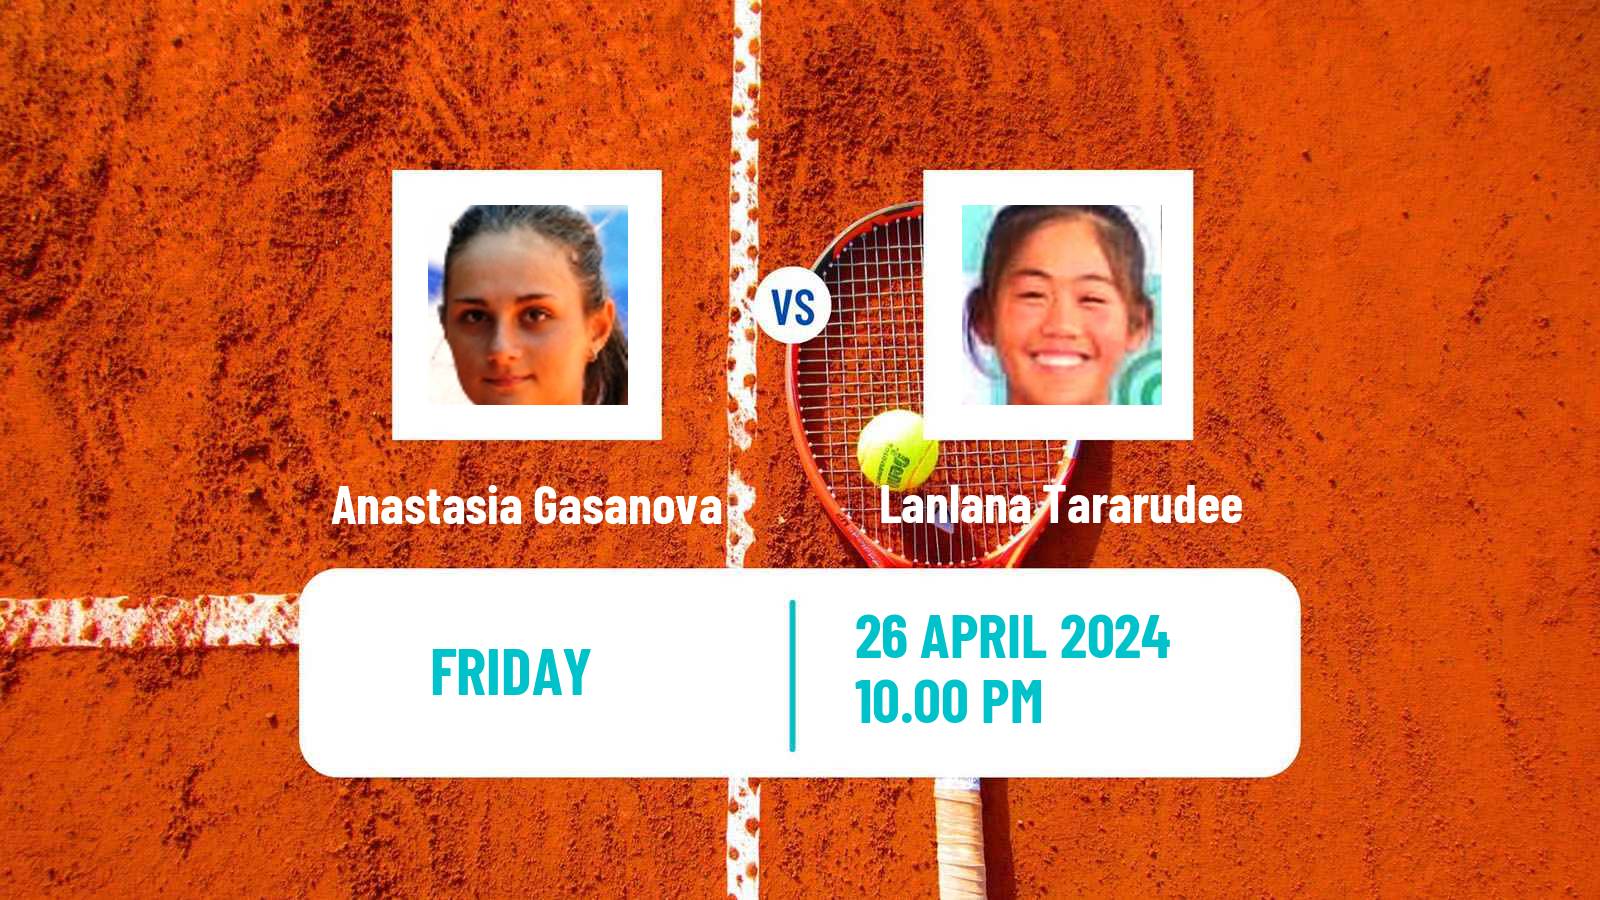 Tennis ITF W50 Wuning Women Anastasia Gasanova - Lanlana Tararudee